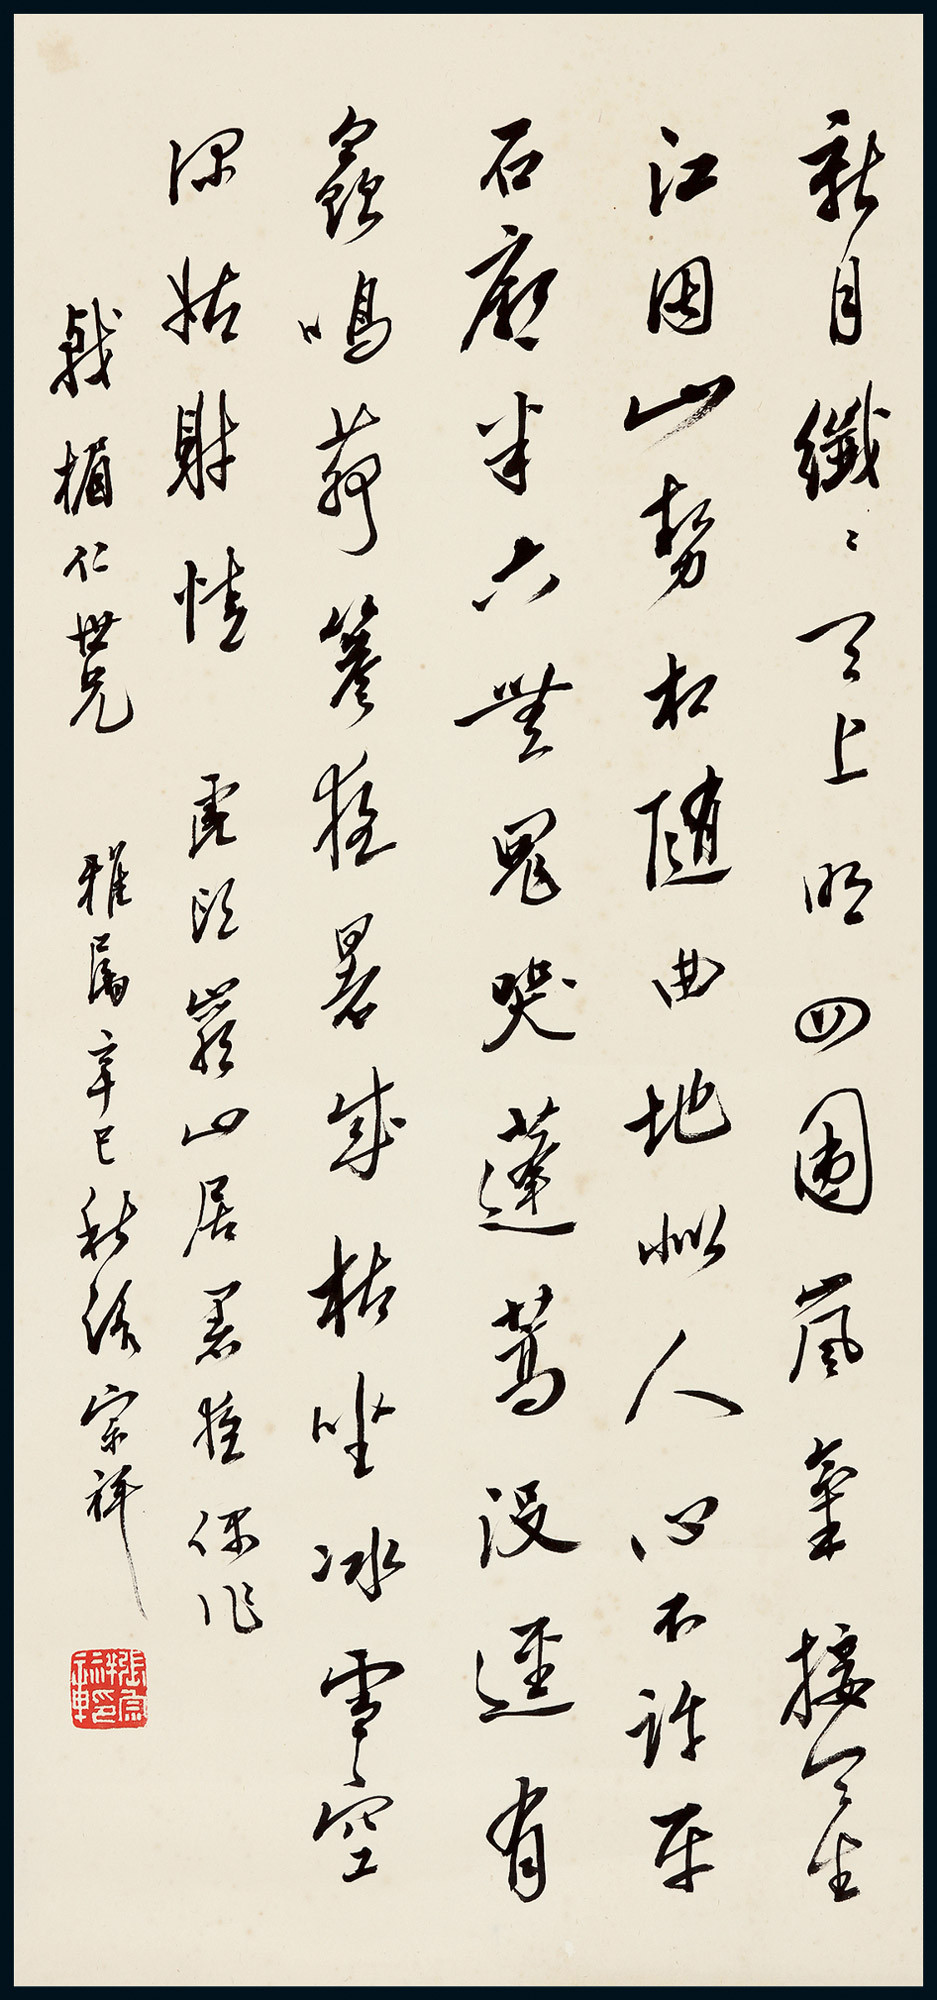 The calligraphy of Zhang Zongxiang